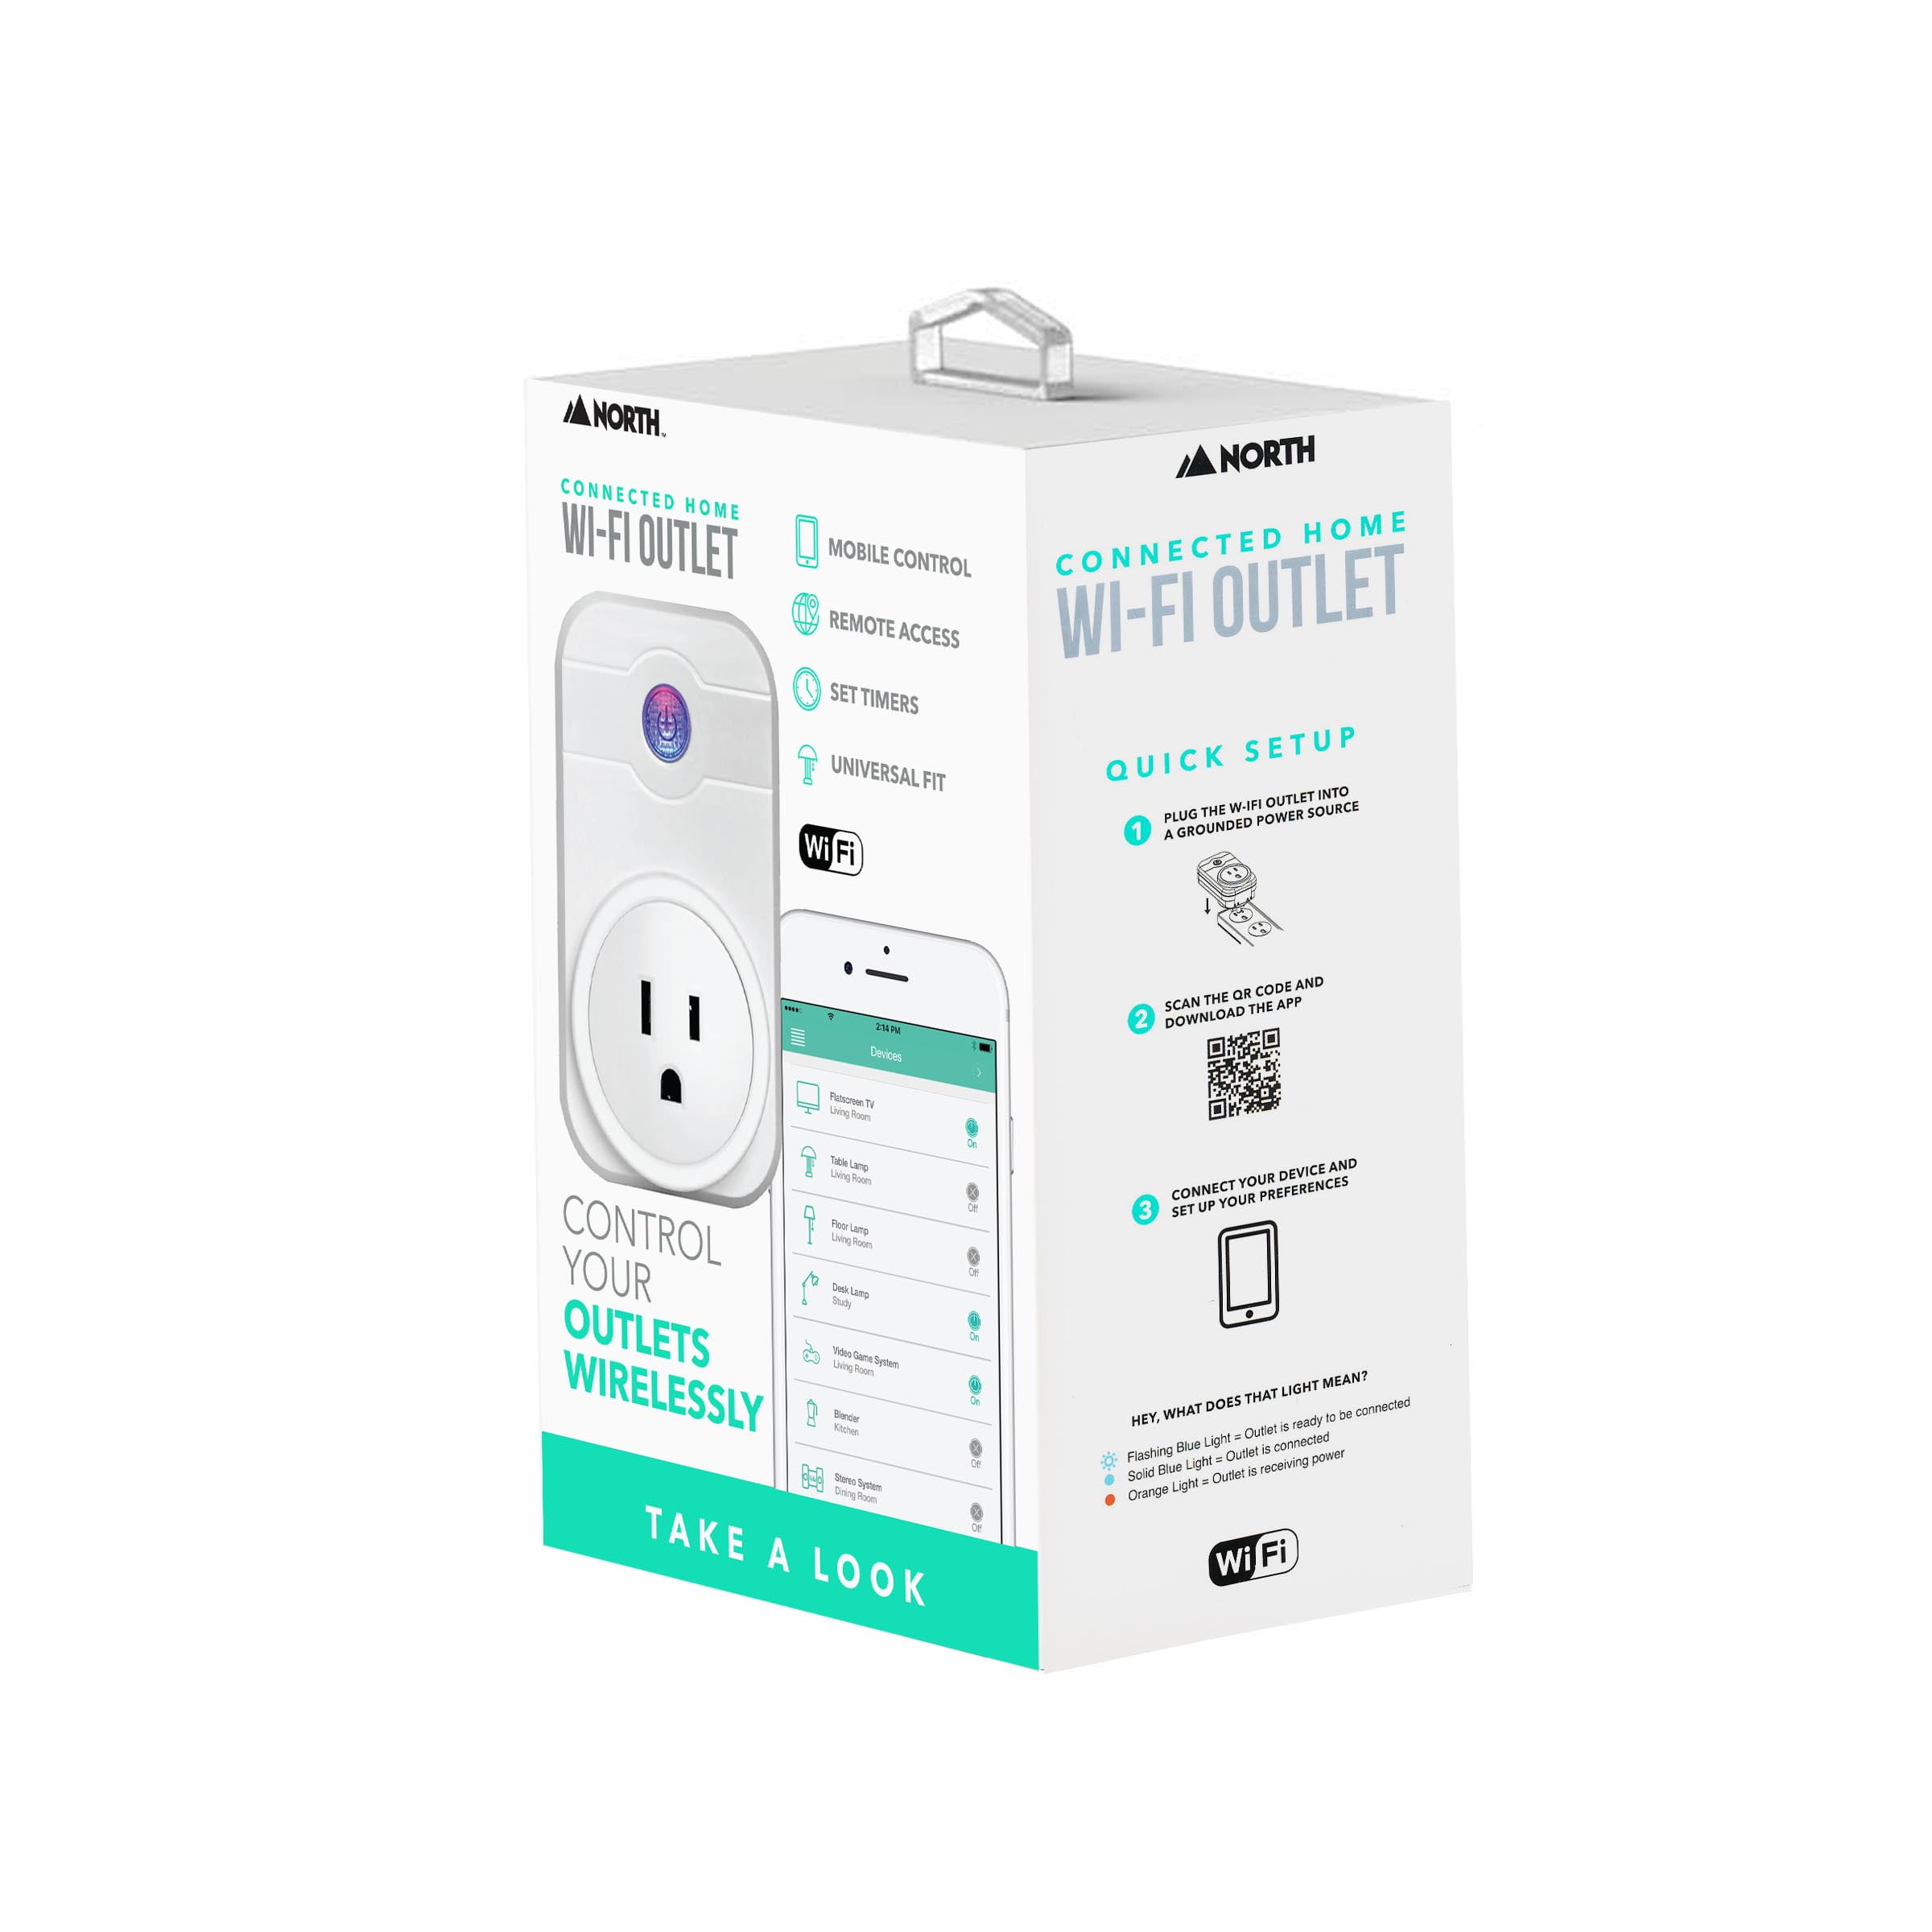 Jonathan Y Smart Plug WiFi Remote App Control for Lights Appliance